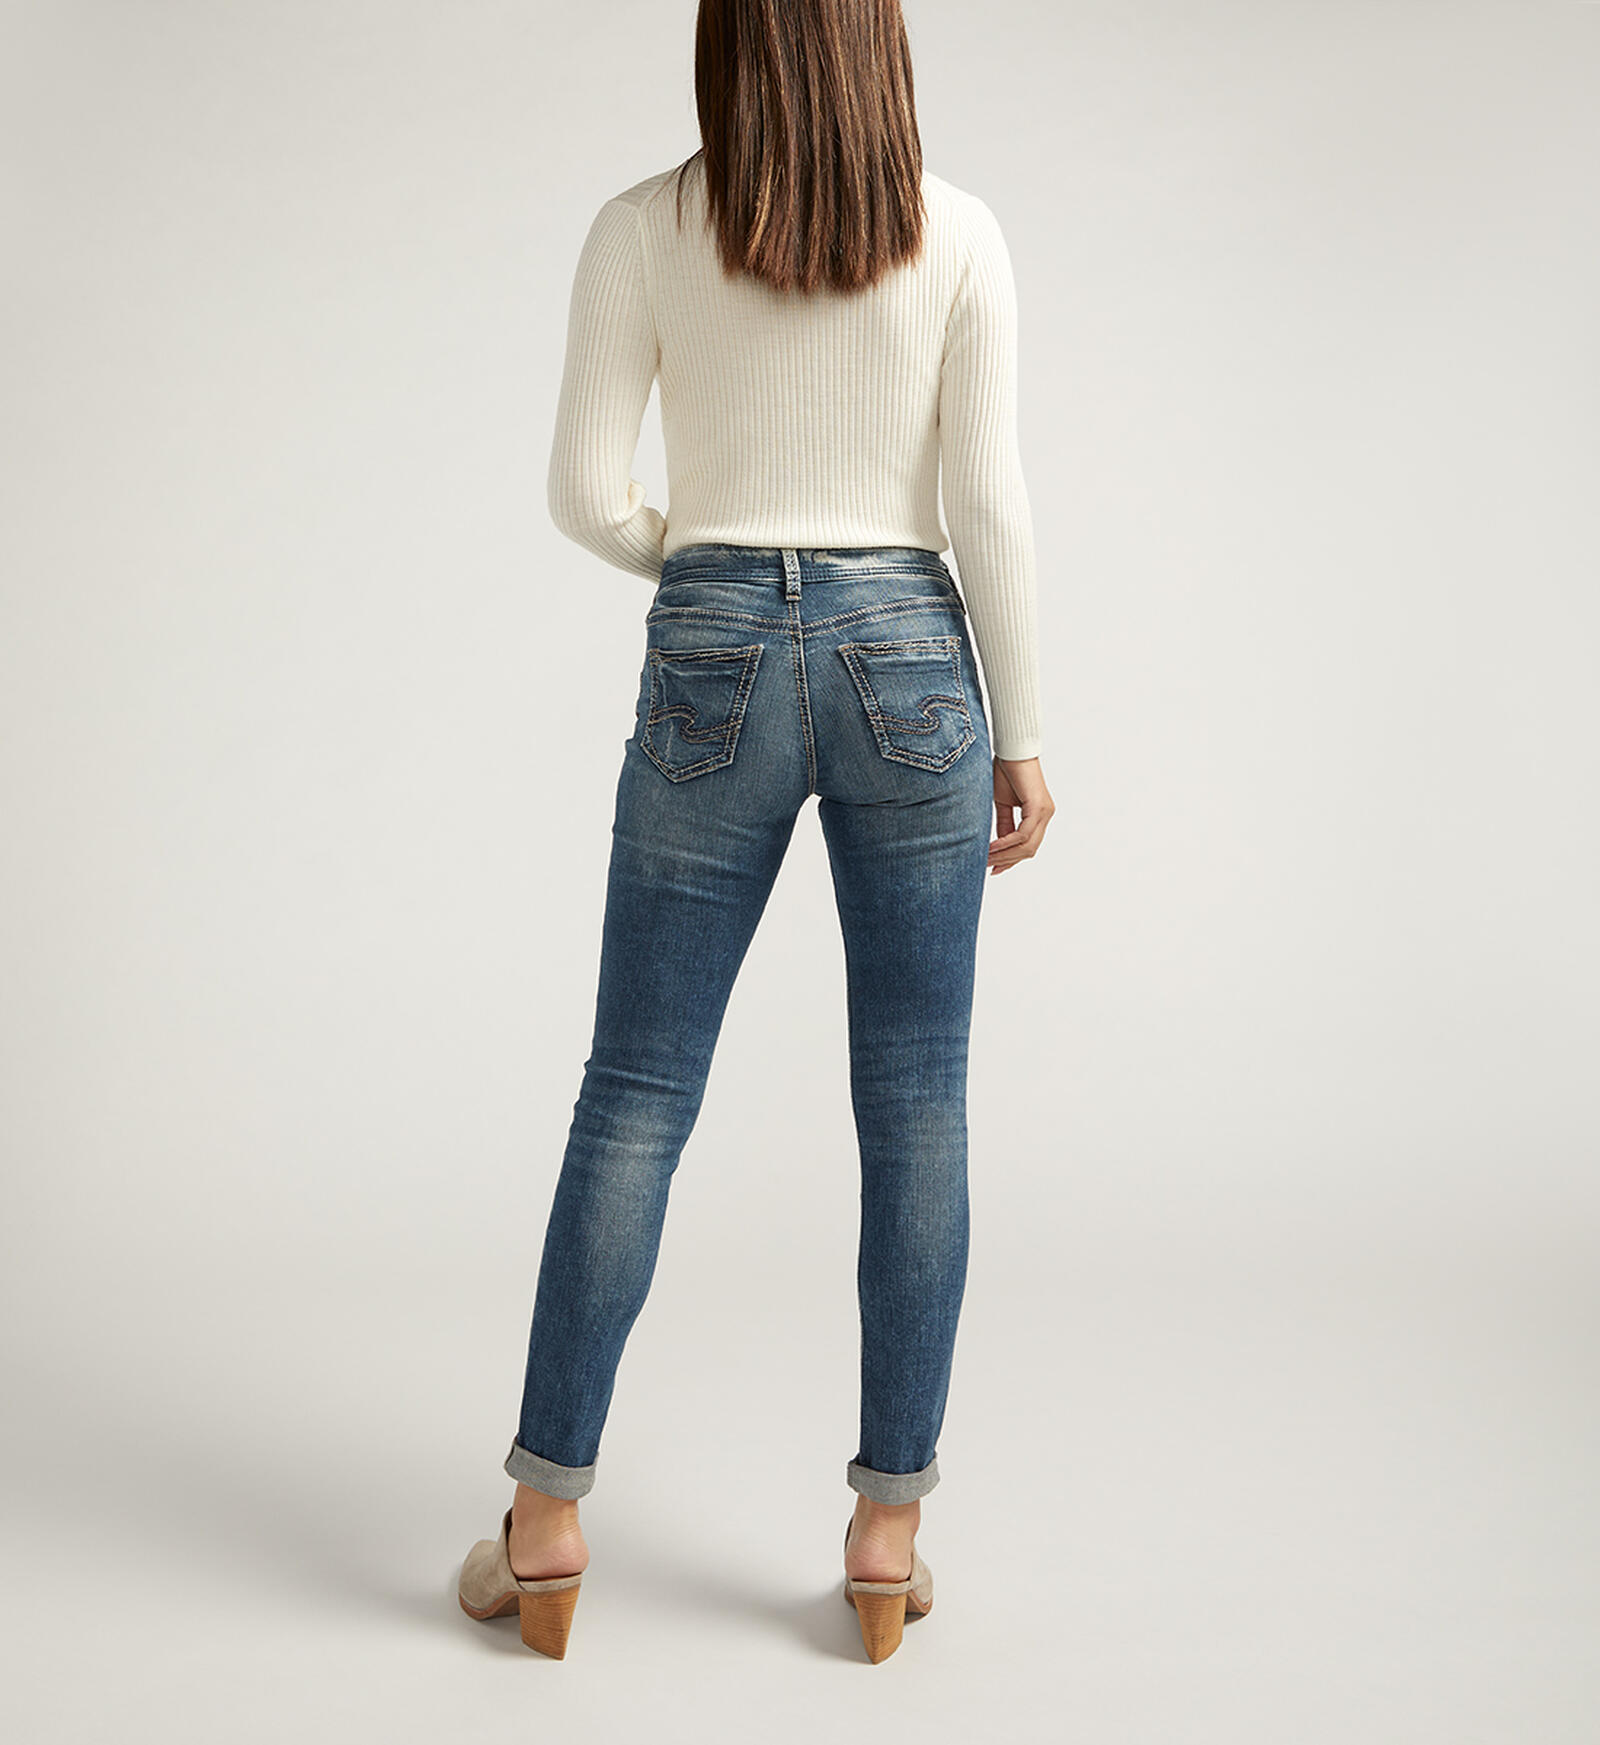 NZ Denim 29 Mid Rise Girlfriend Jeans